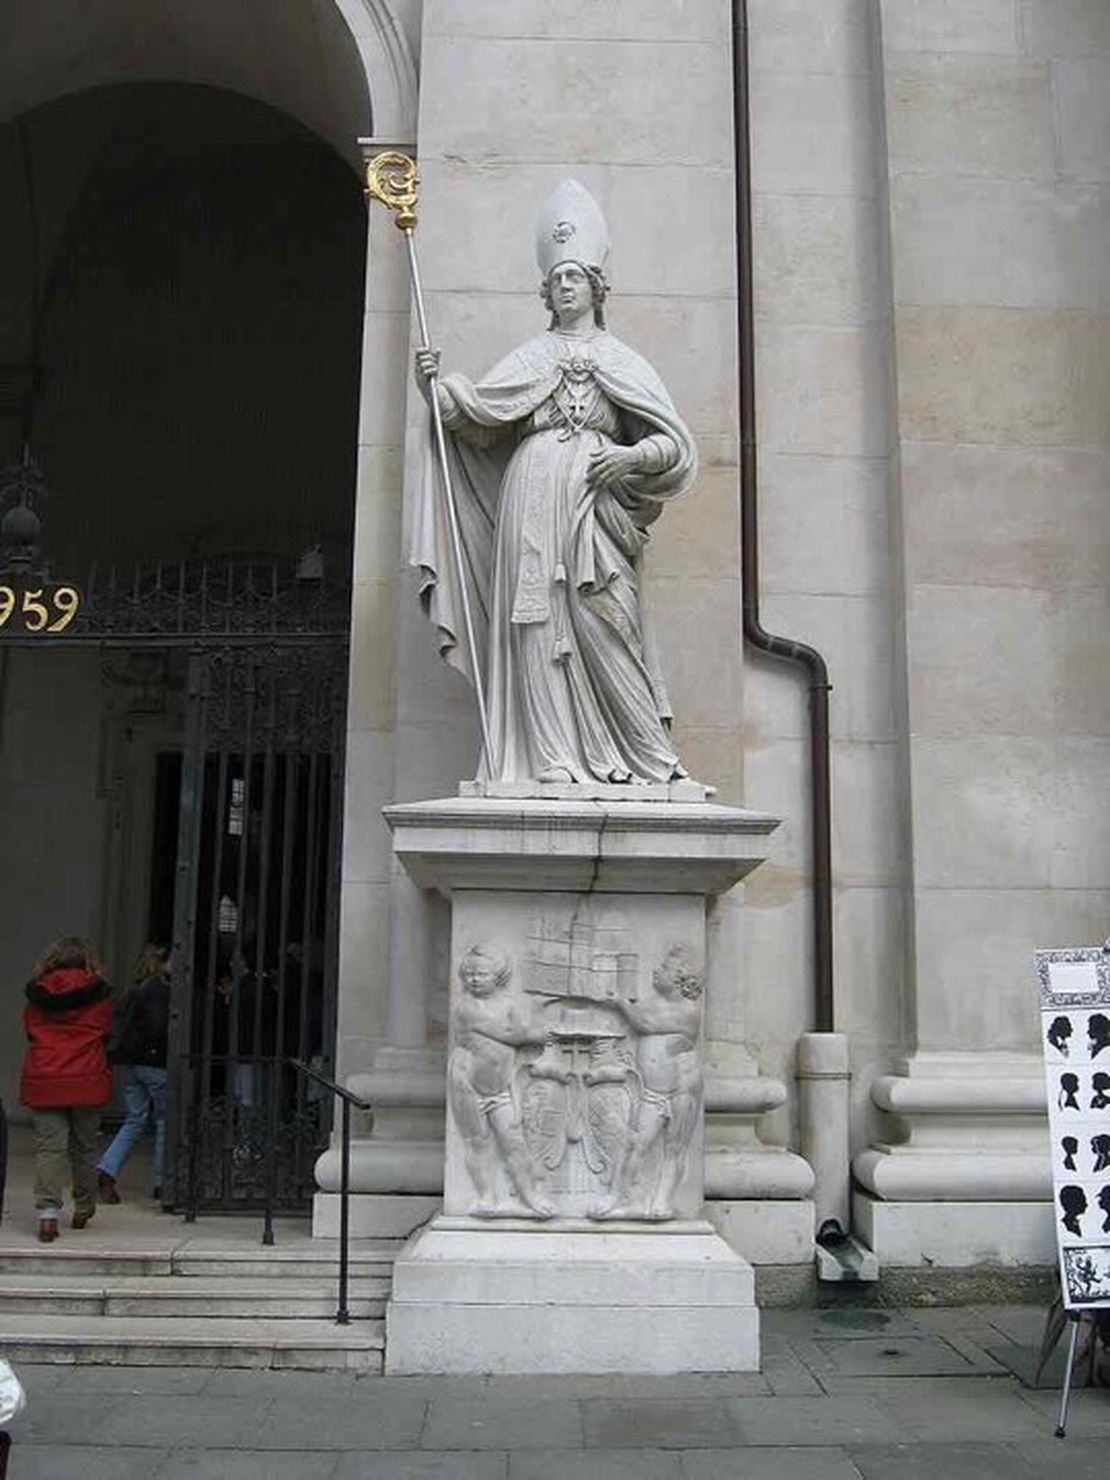 St. Vergilius or Ferghil, the Geometer, died